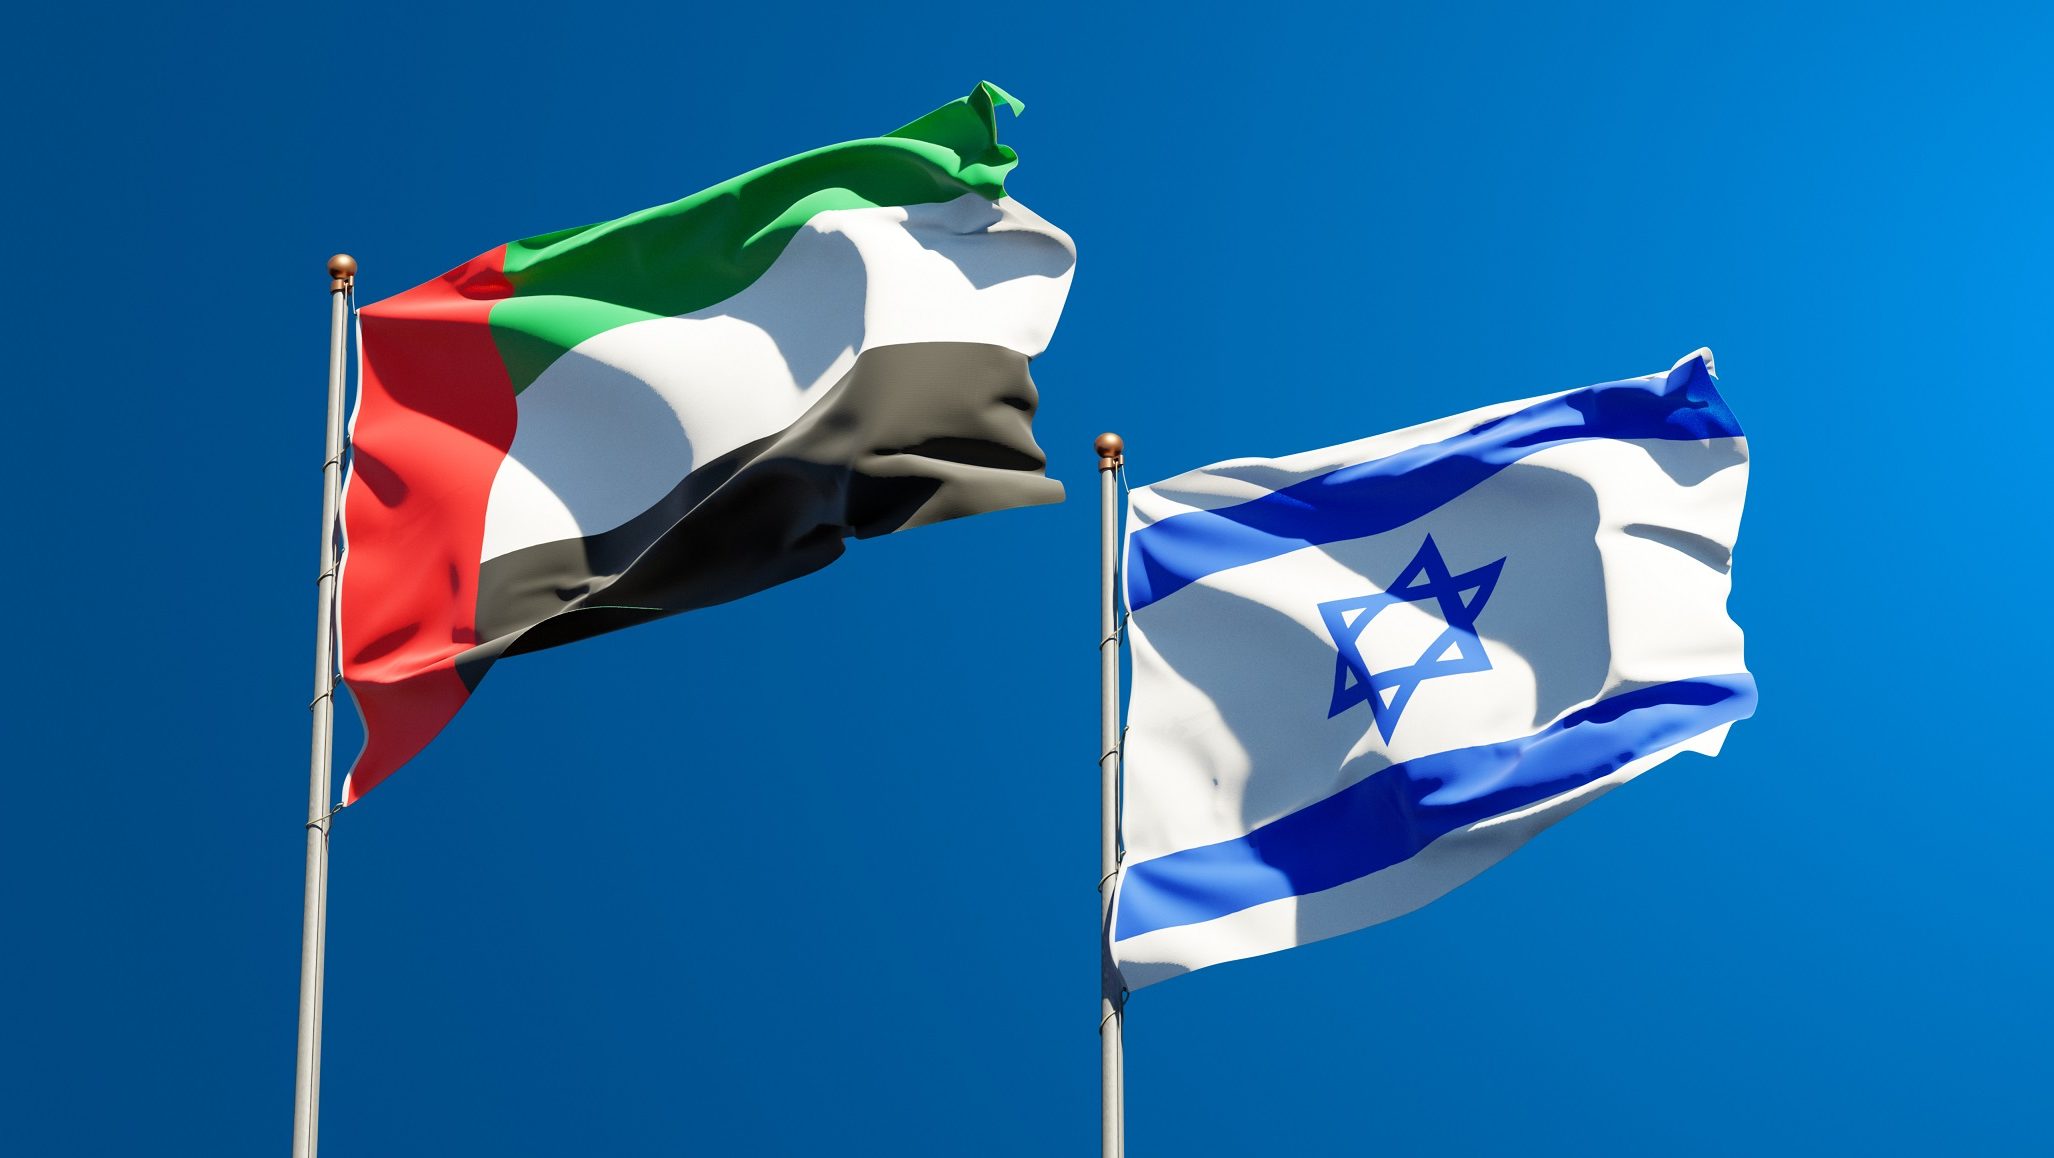 Israel’s President To Make ‘Historic Visit’ to UAE